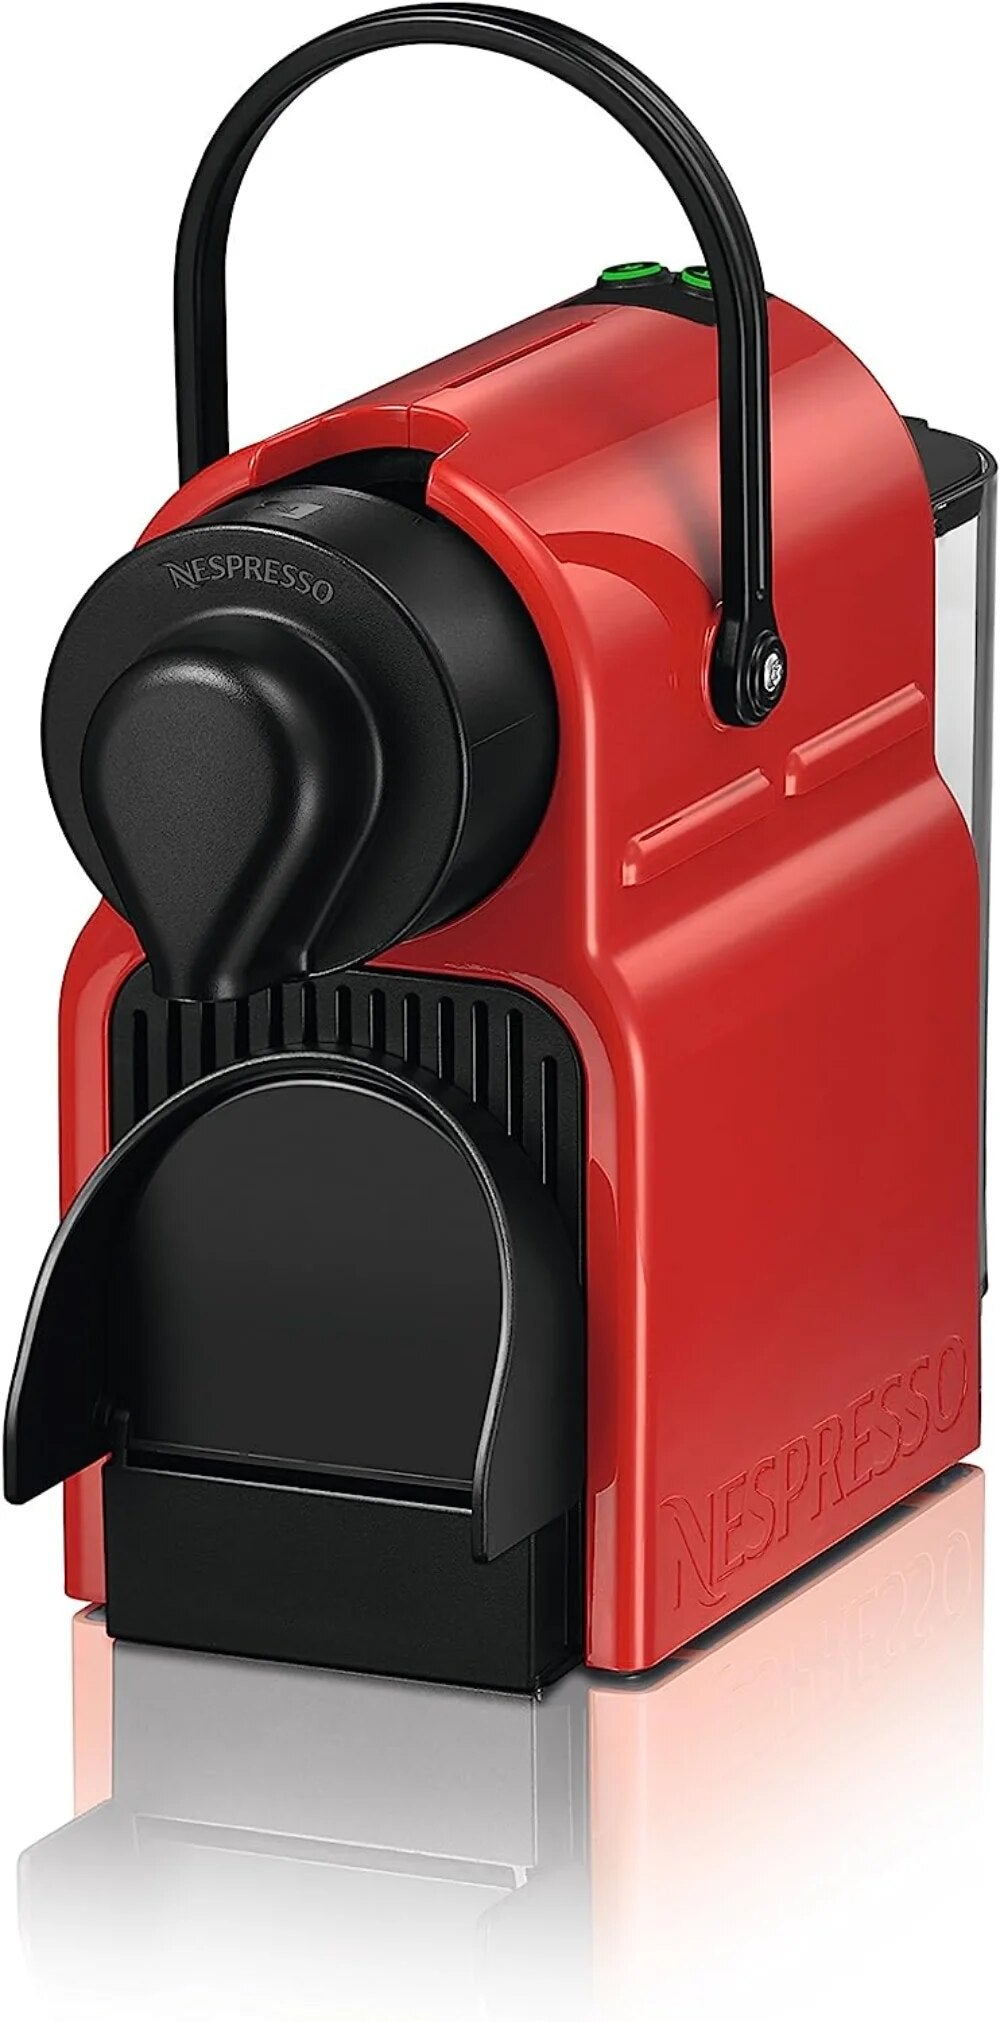 Red Nespresso Machine has a handle